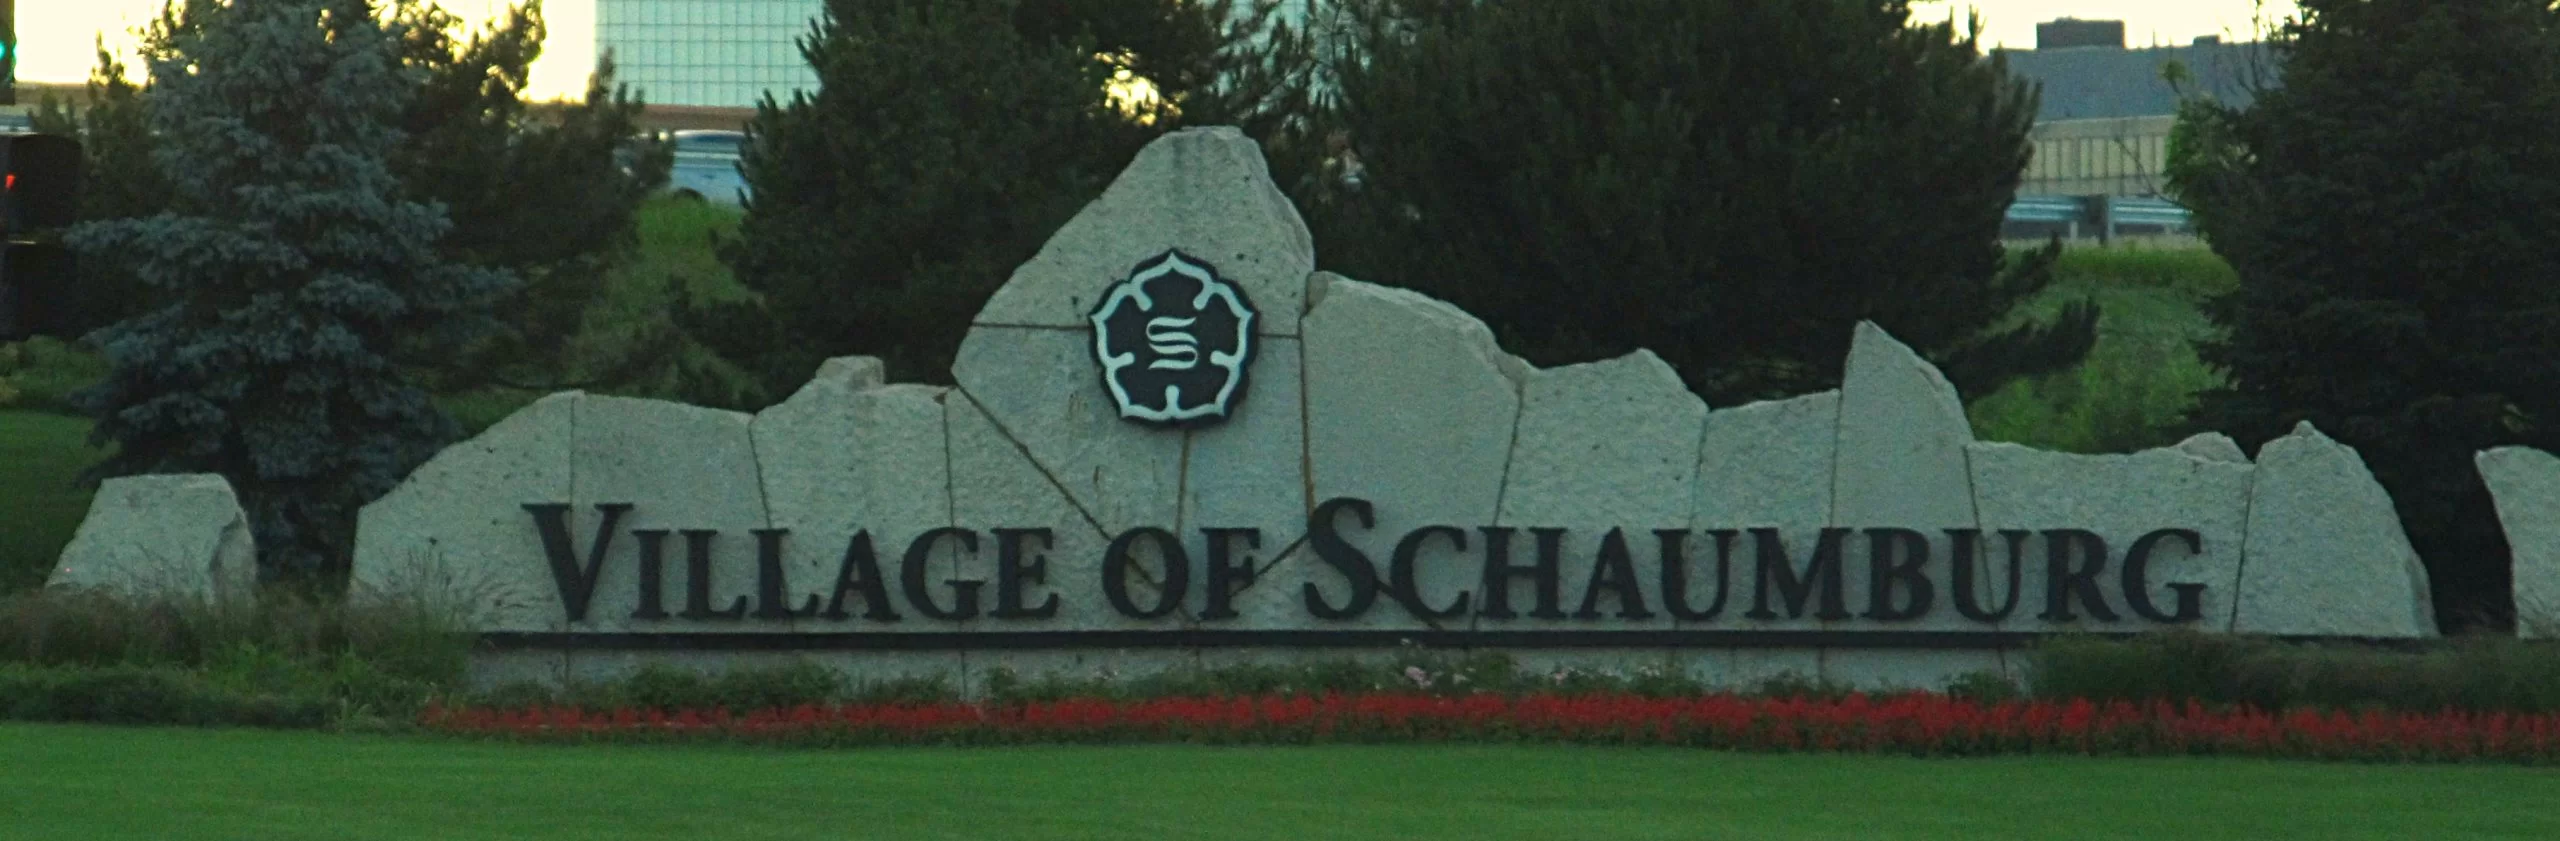 Schaumburg, Illinois Welcome Sign